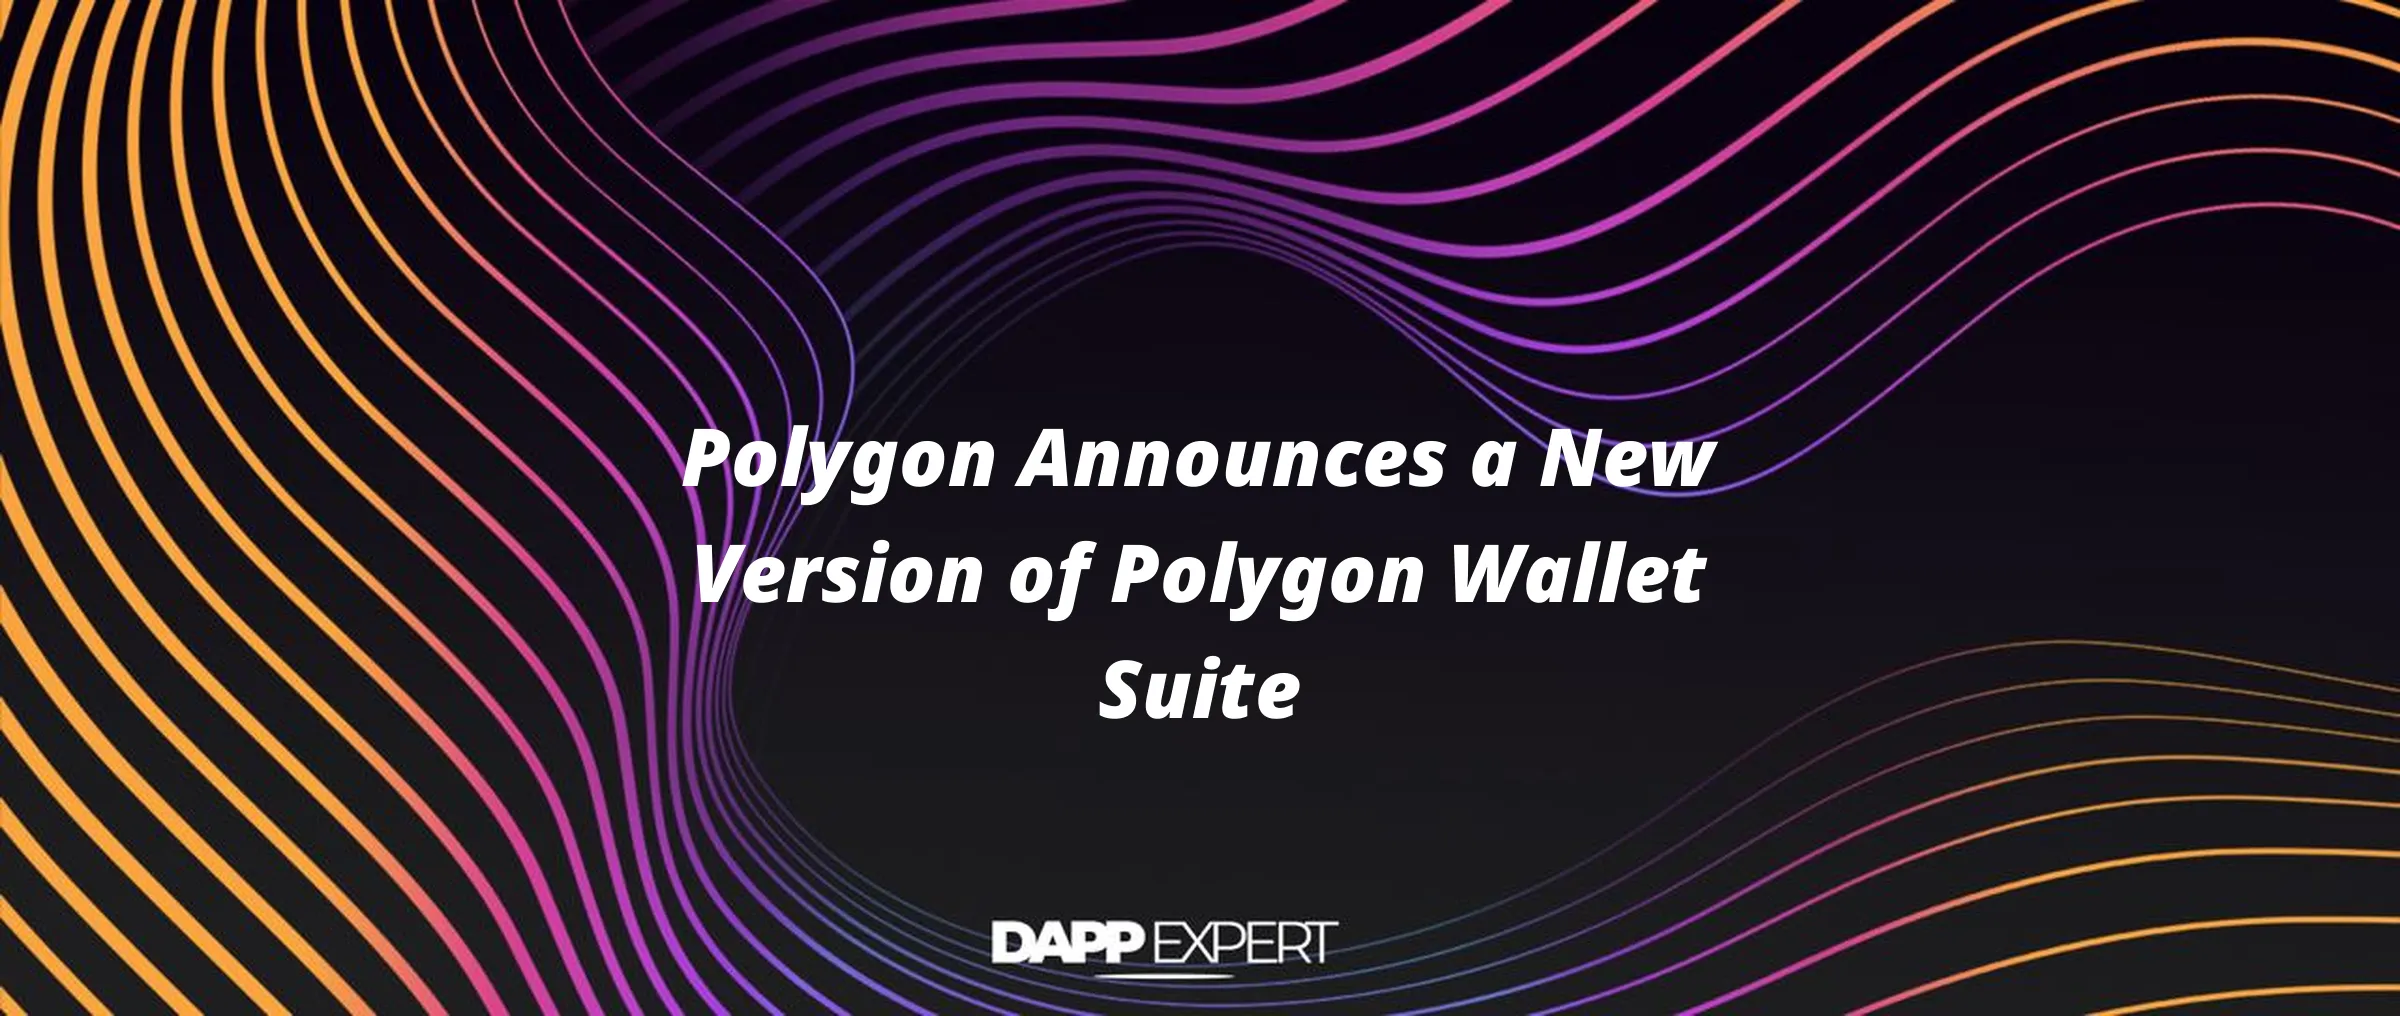 Polygon Announces a New Version of Polygon Wallet Suite